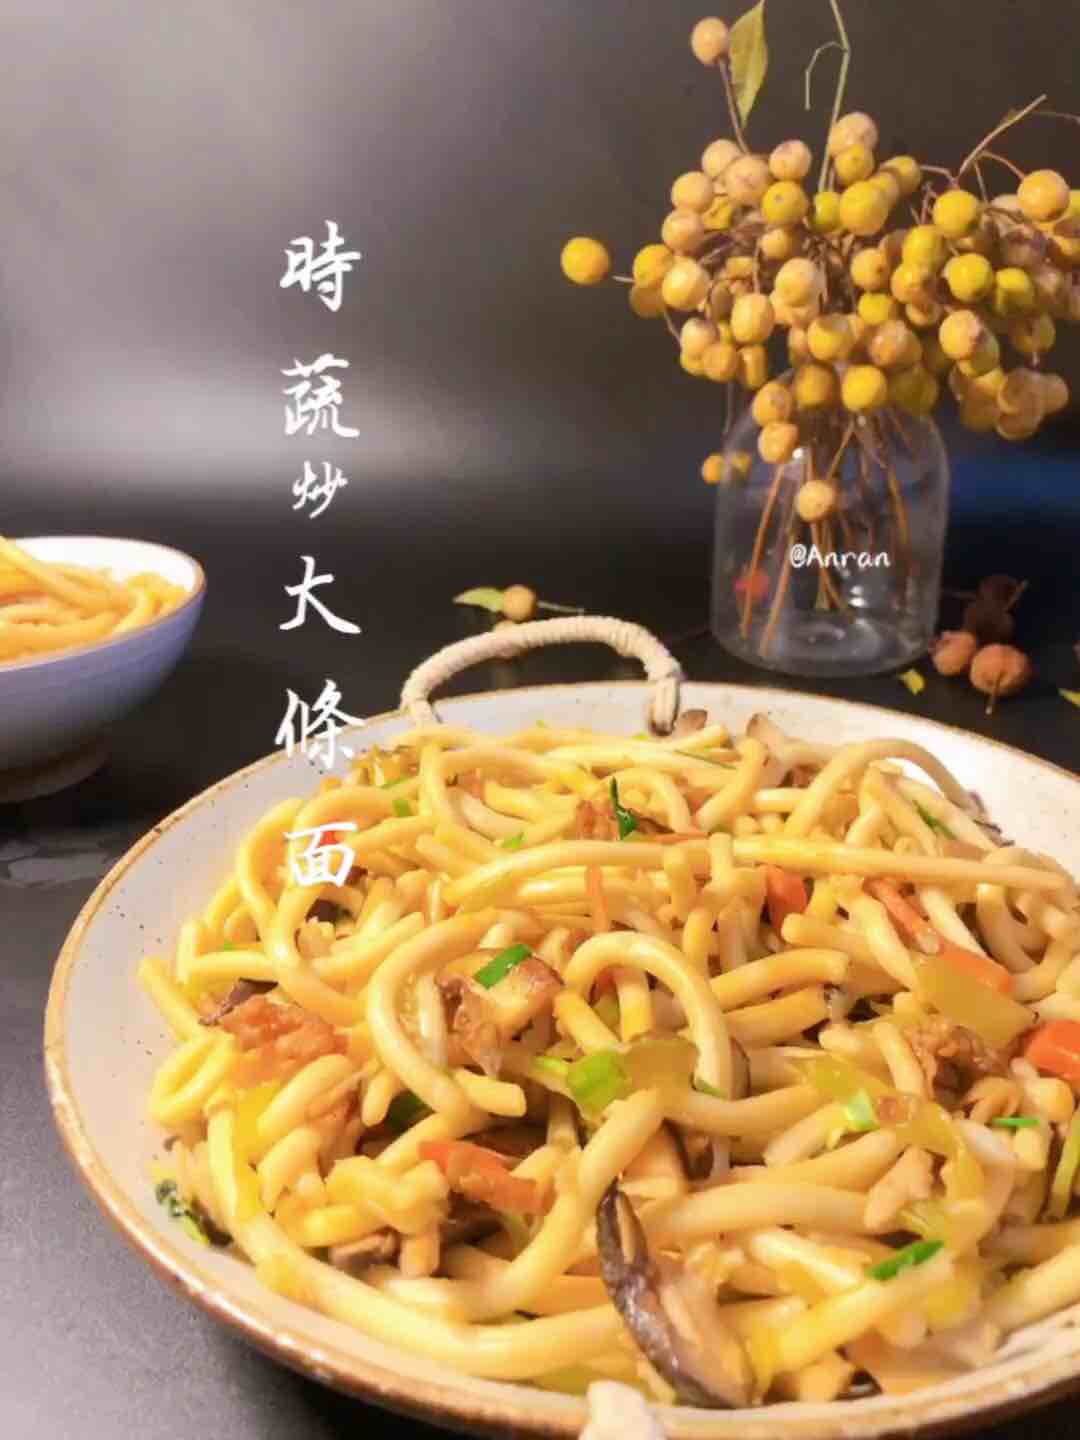 Stir-fried Large Noodles with Seasonal Vegetables